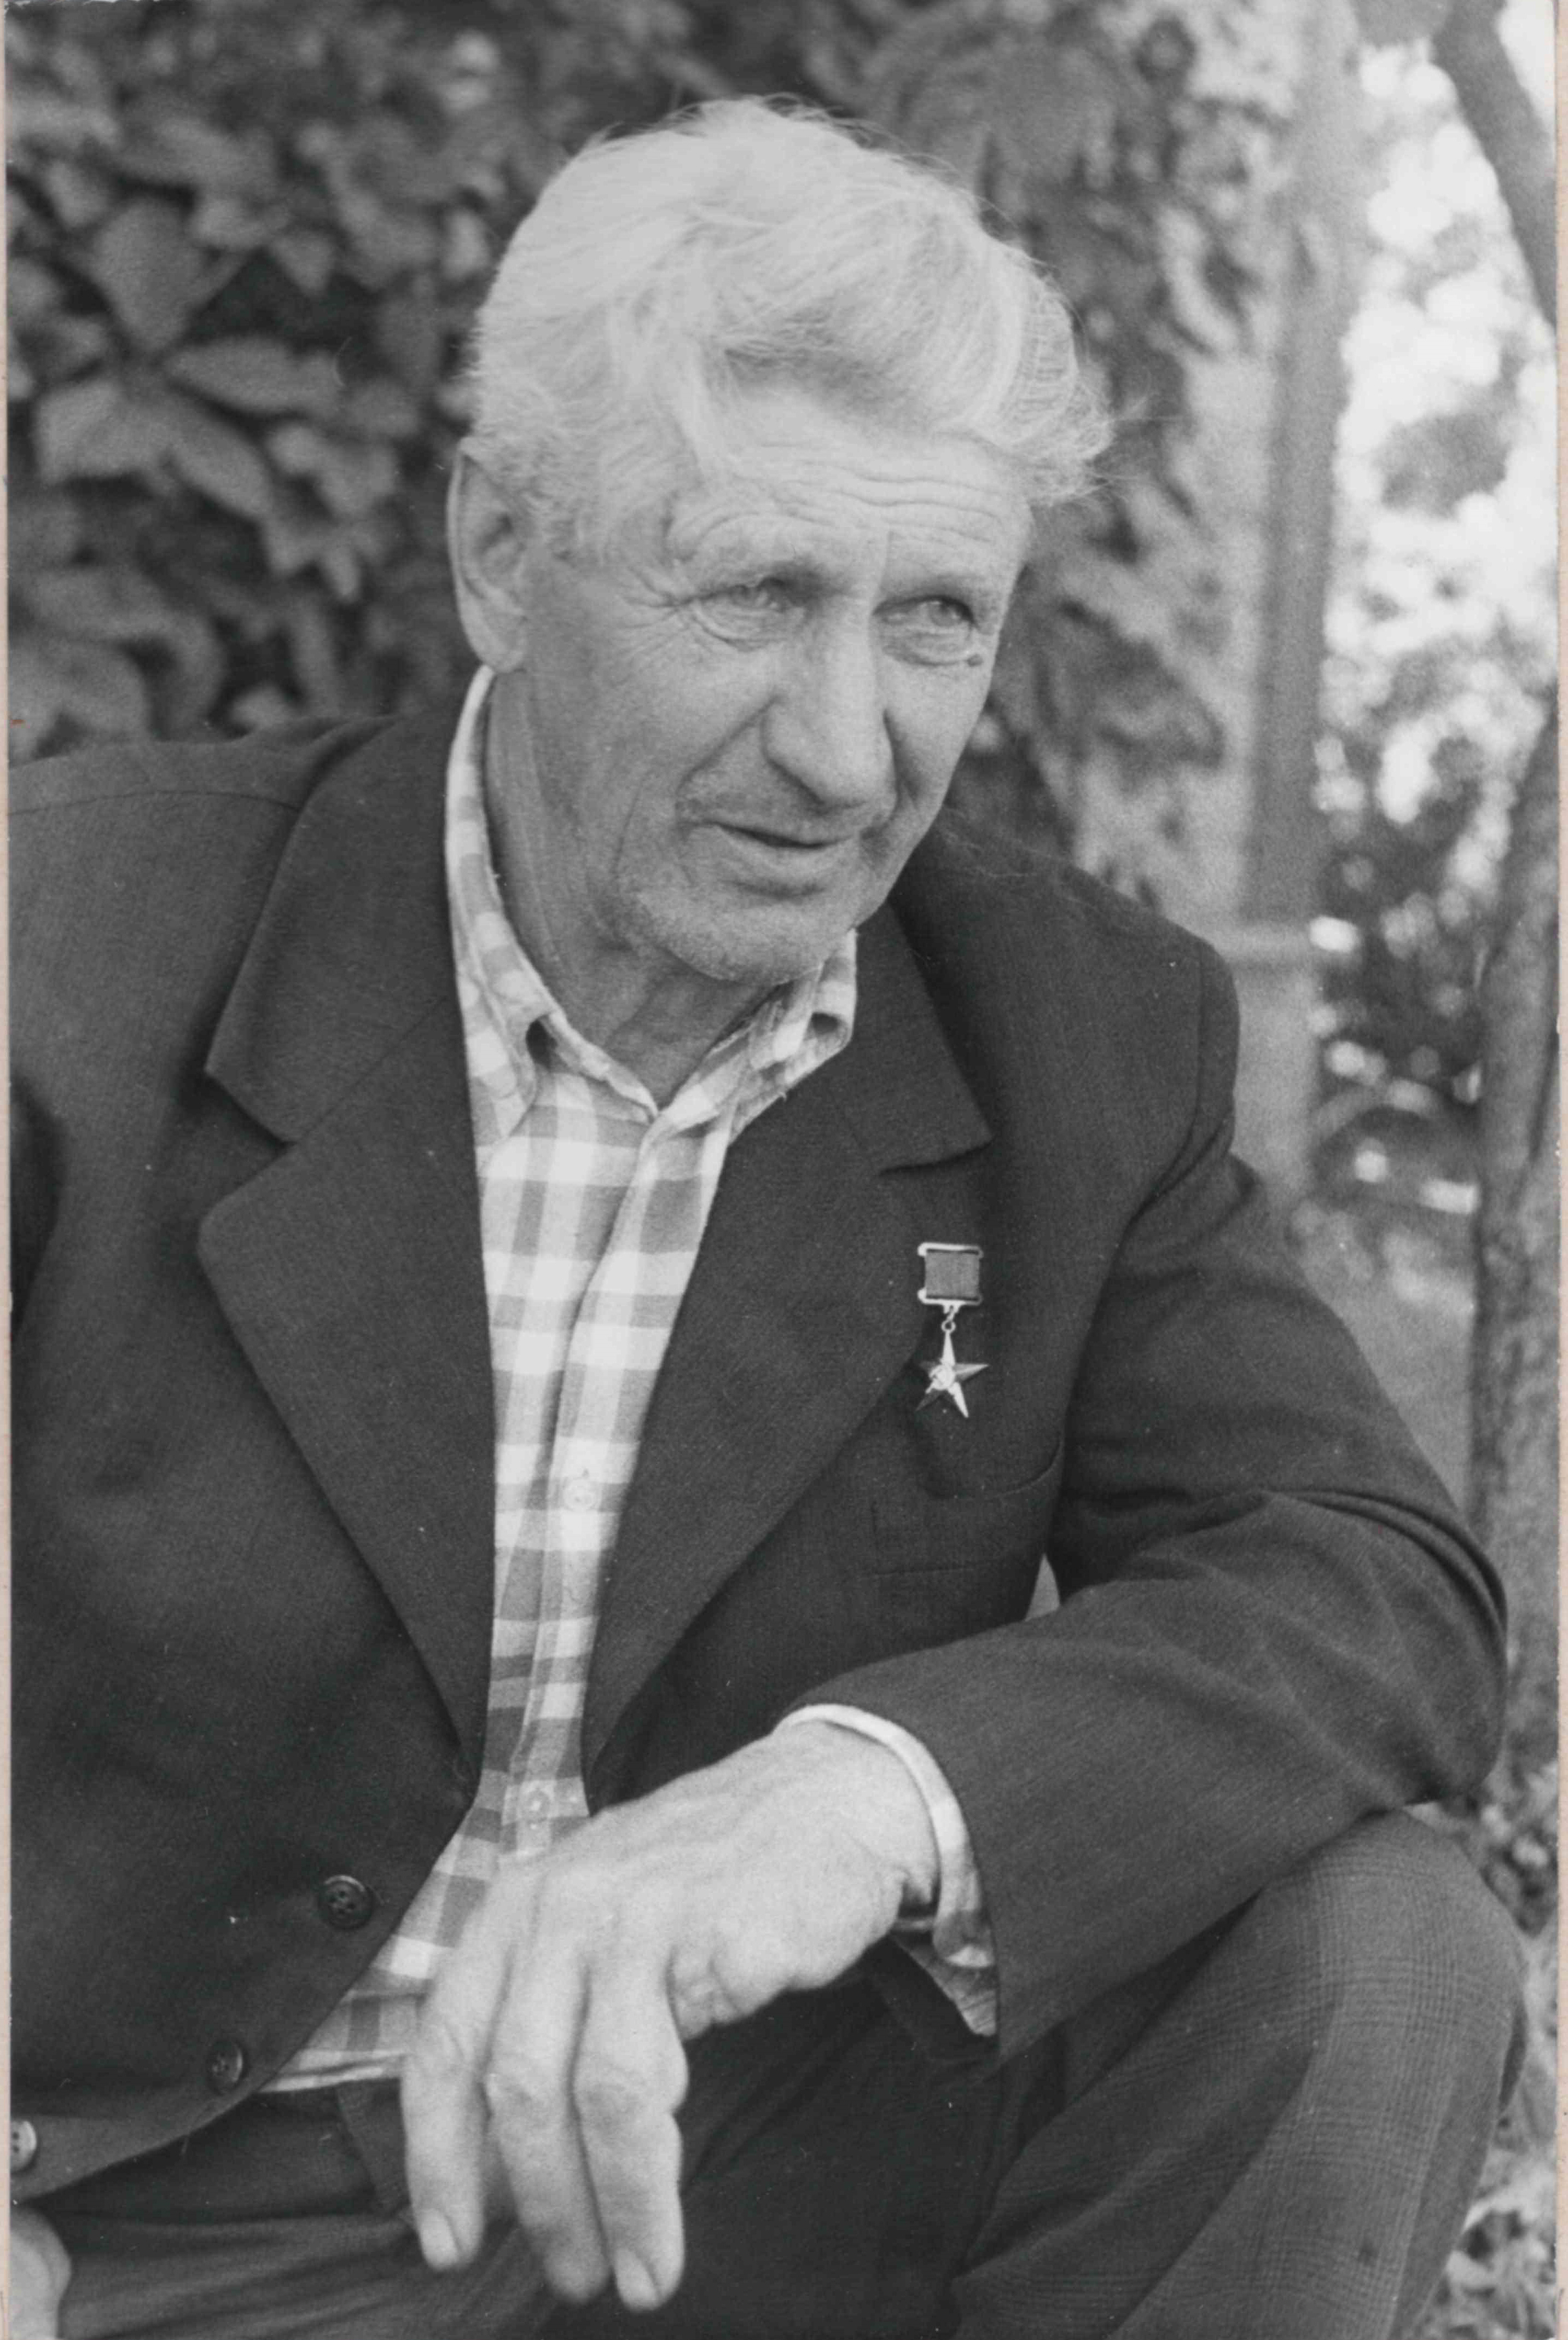 Socialist work hero Johannes Tanner, Haapsalu EPT tractor